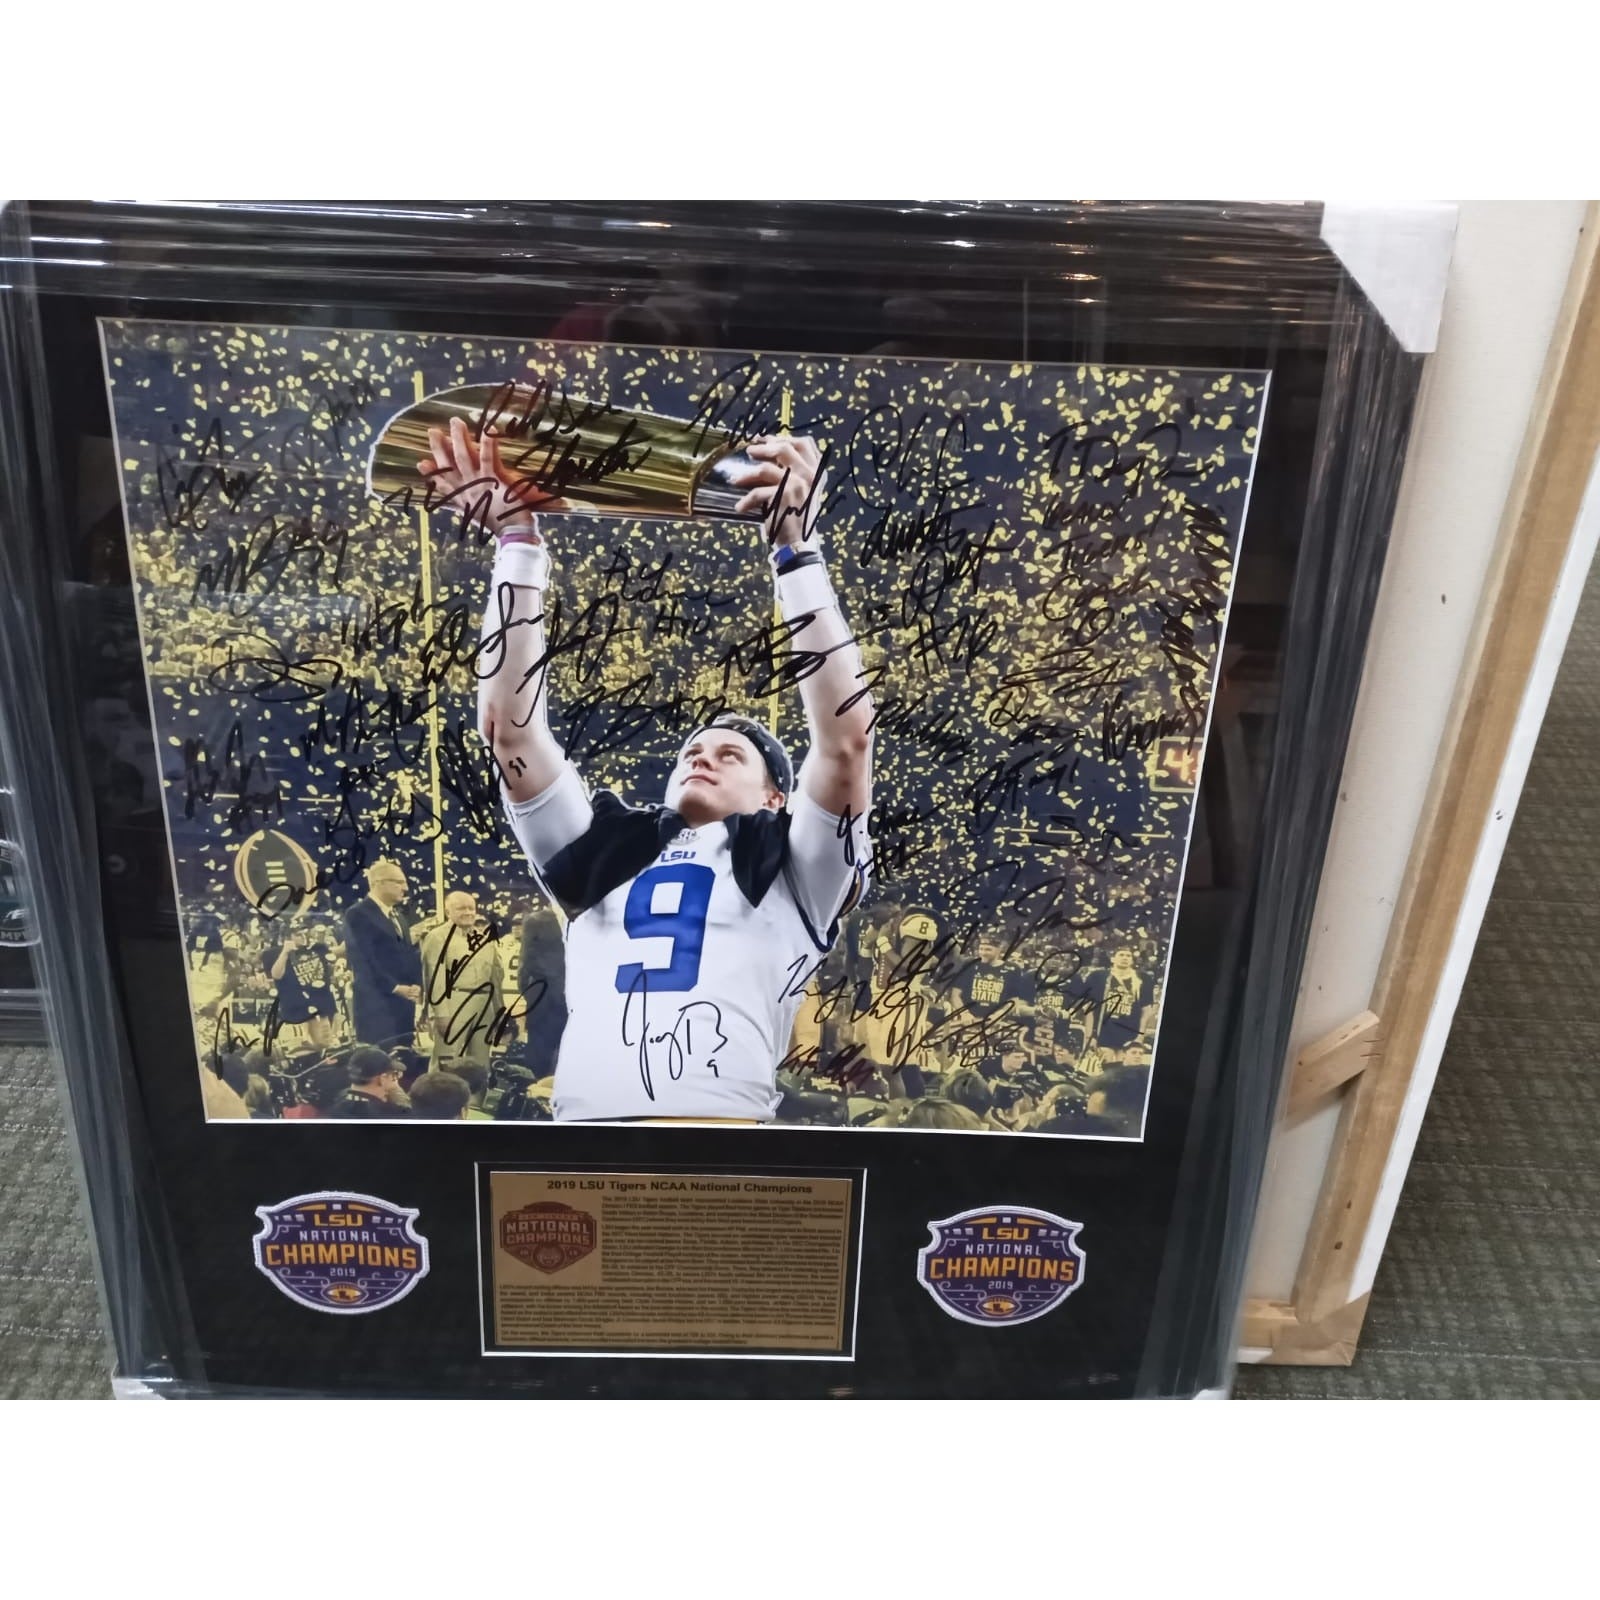 Joe Burrow LSU Tigers national champions 16x20 photo team signed and framed